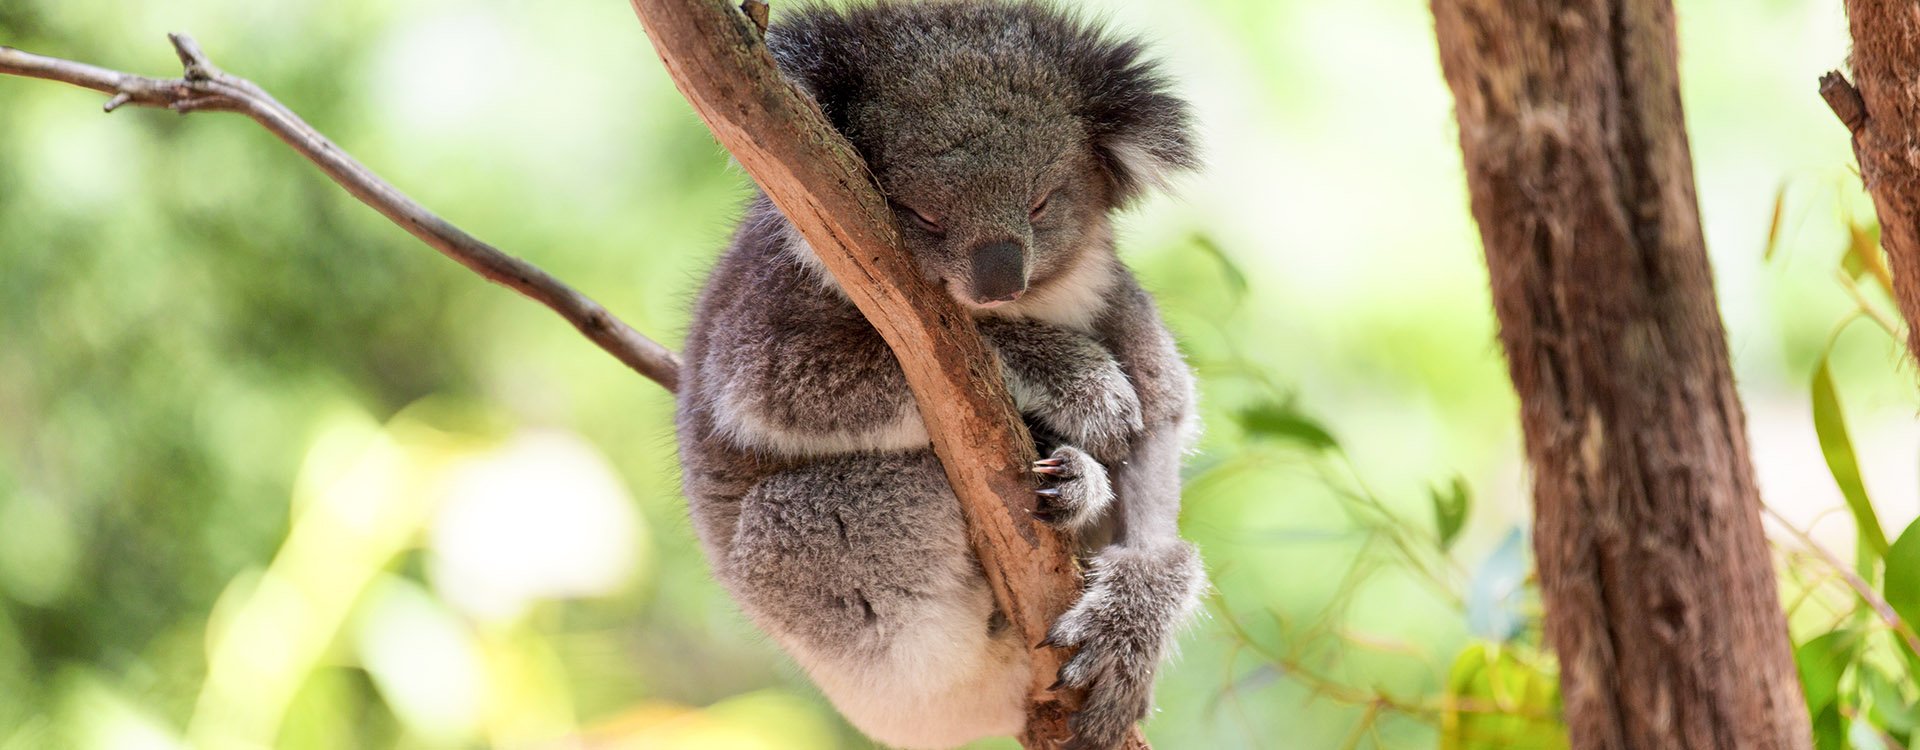 Sleeping/ relaxing koala on eucalyptus tree, sunlight. Australia